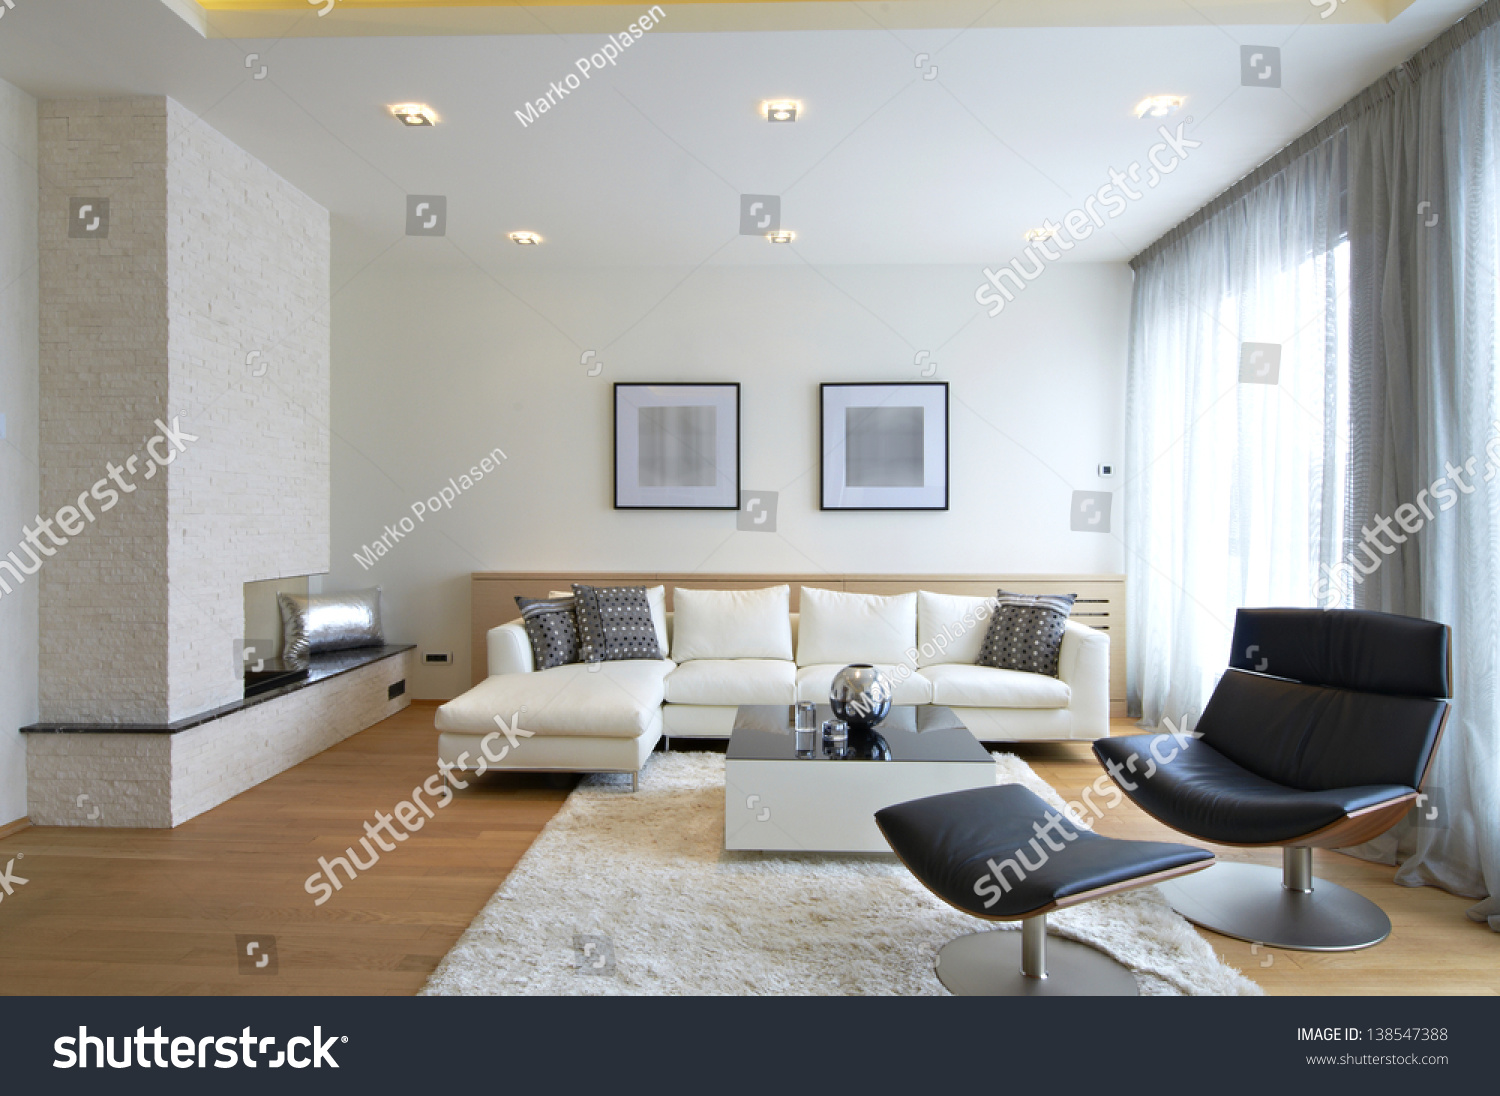 Shutterstock Images Of Living Room Hand Rendered